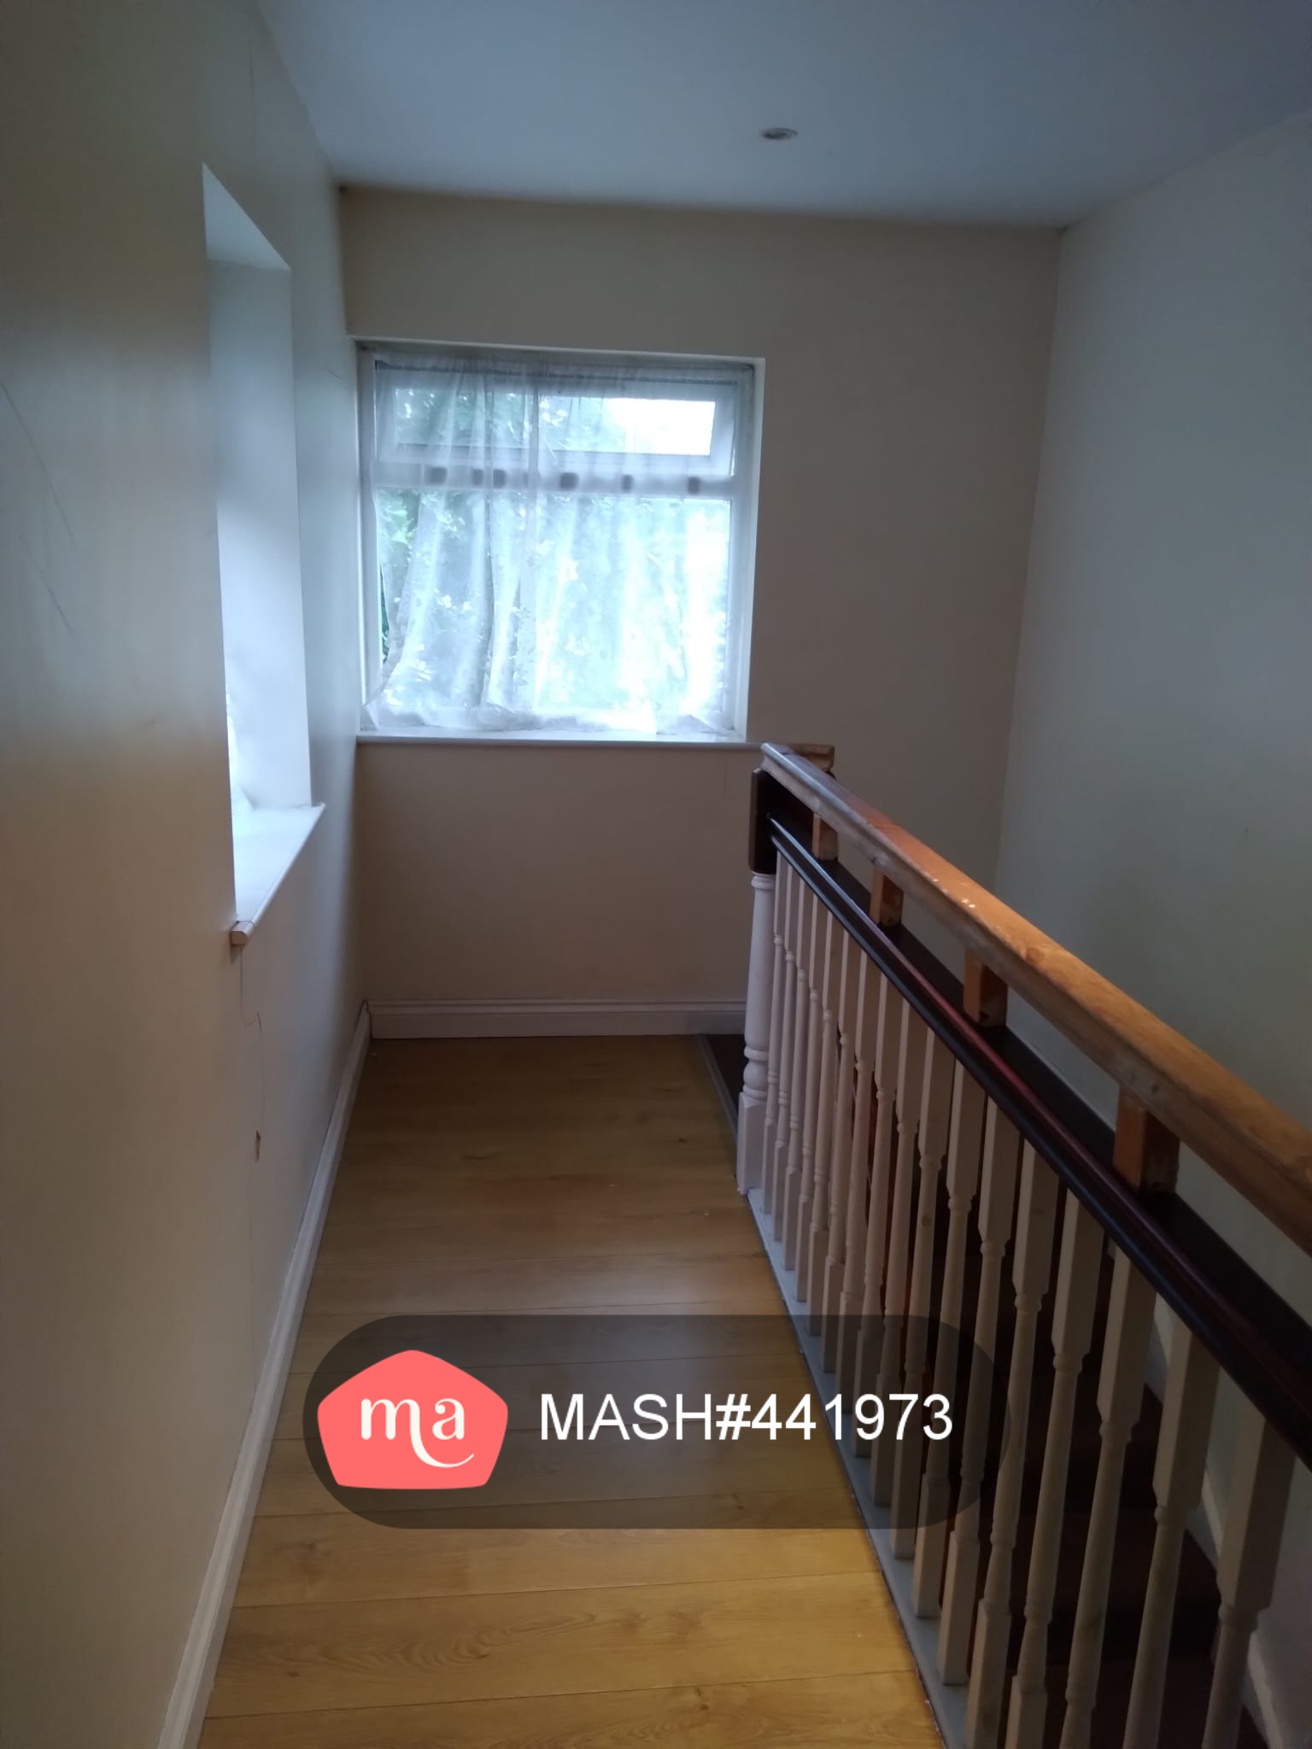 2 Bedroom Flat to rent in Isleworth - Mashroom